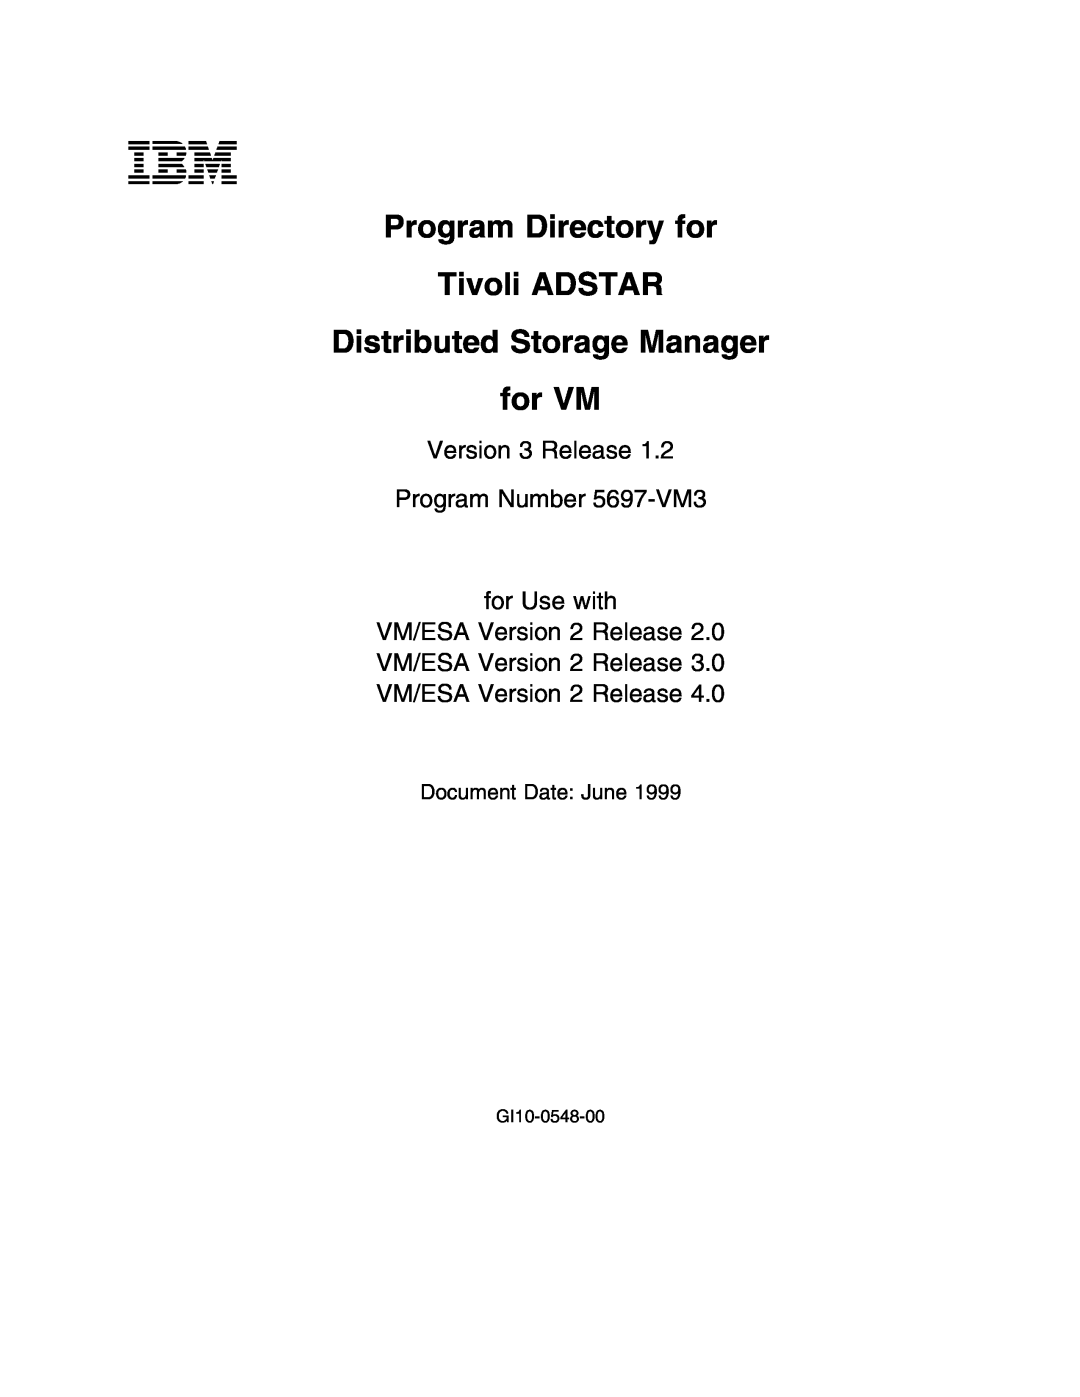 IBM 5697-VM3 manual Program Directory for Tivoli ADSTAR Distributed Storage Manager, for VM, Document Date June 